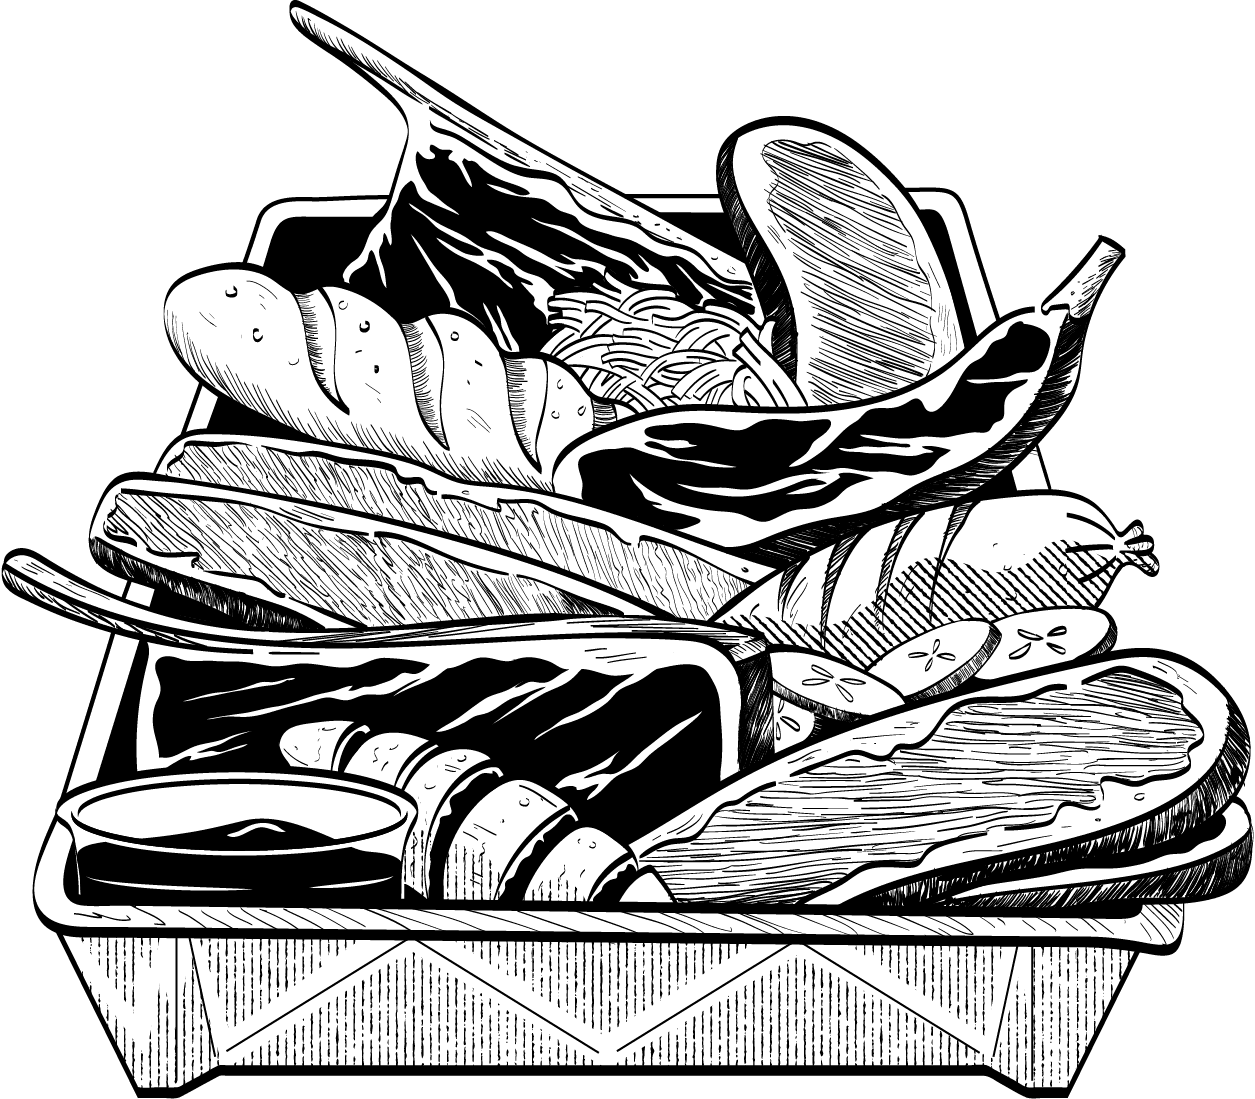 Meatbox platter illustration